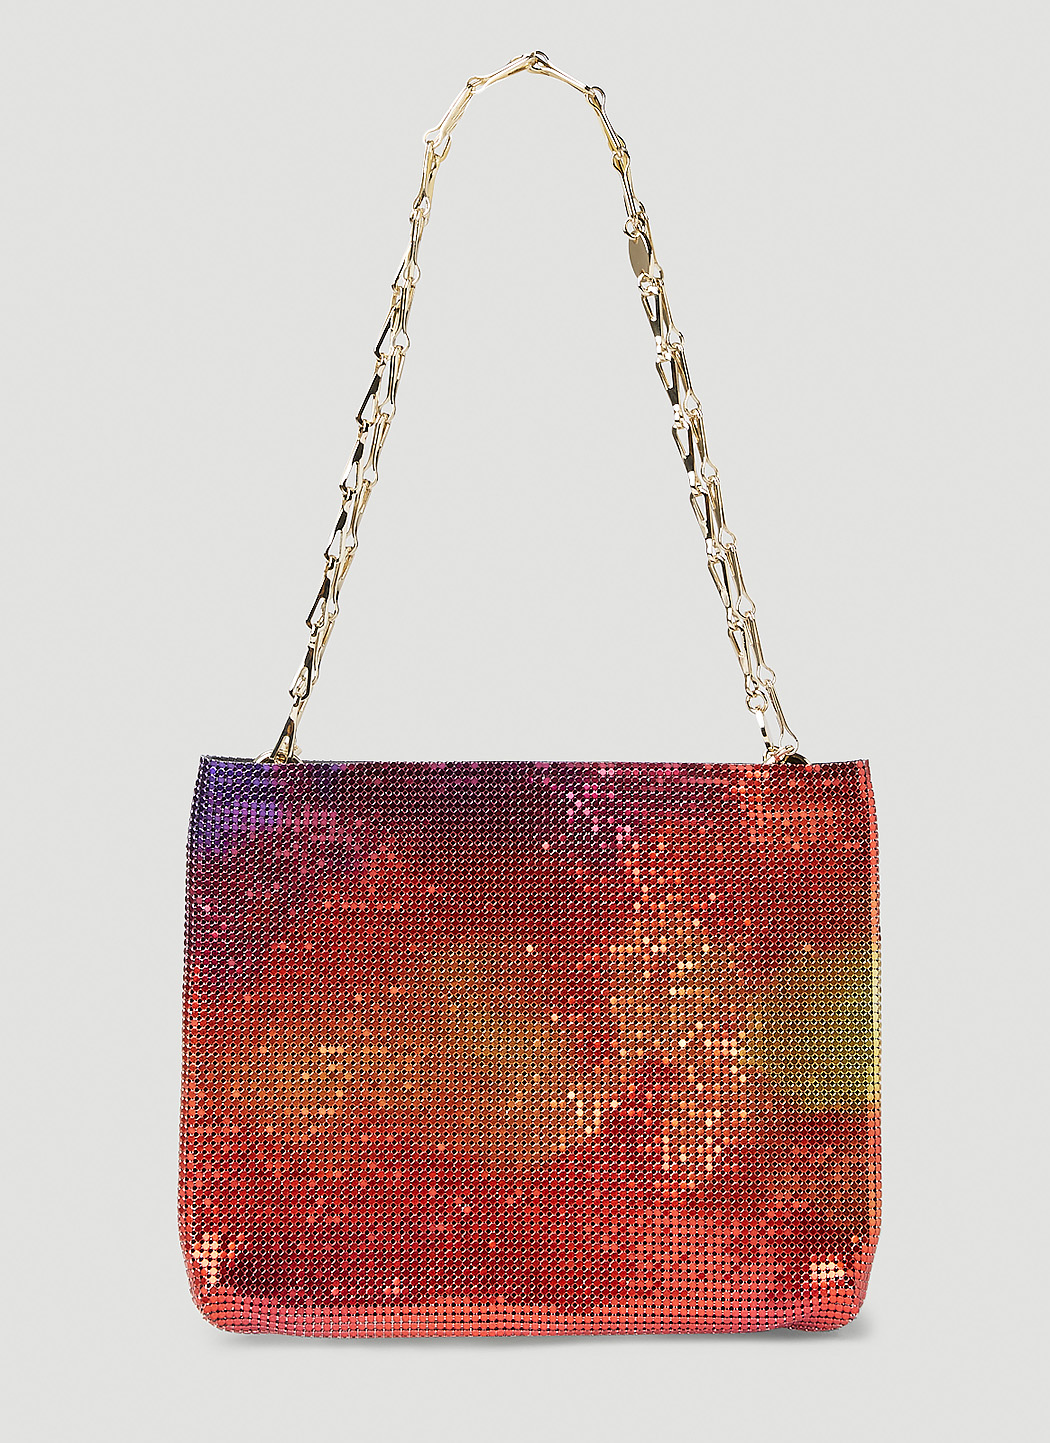 Pixel Shoulder Bag